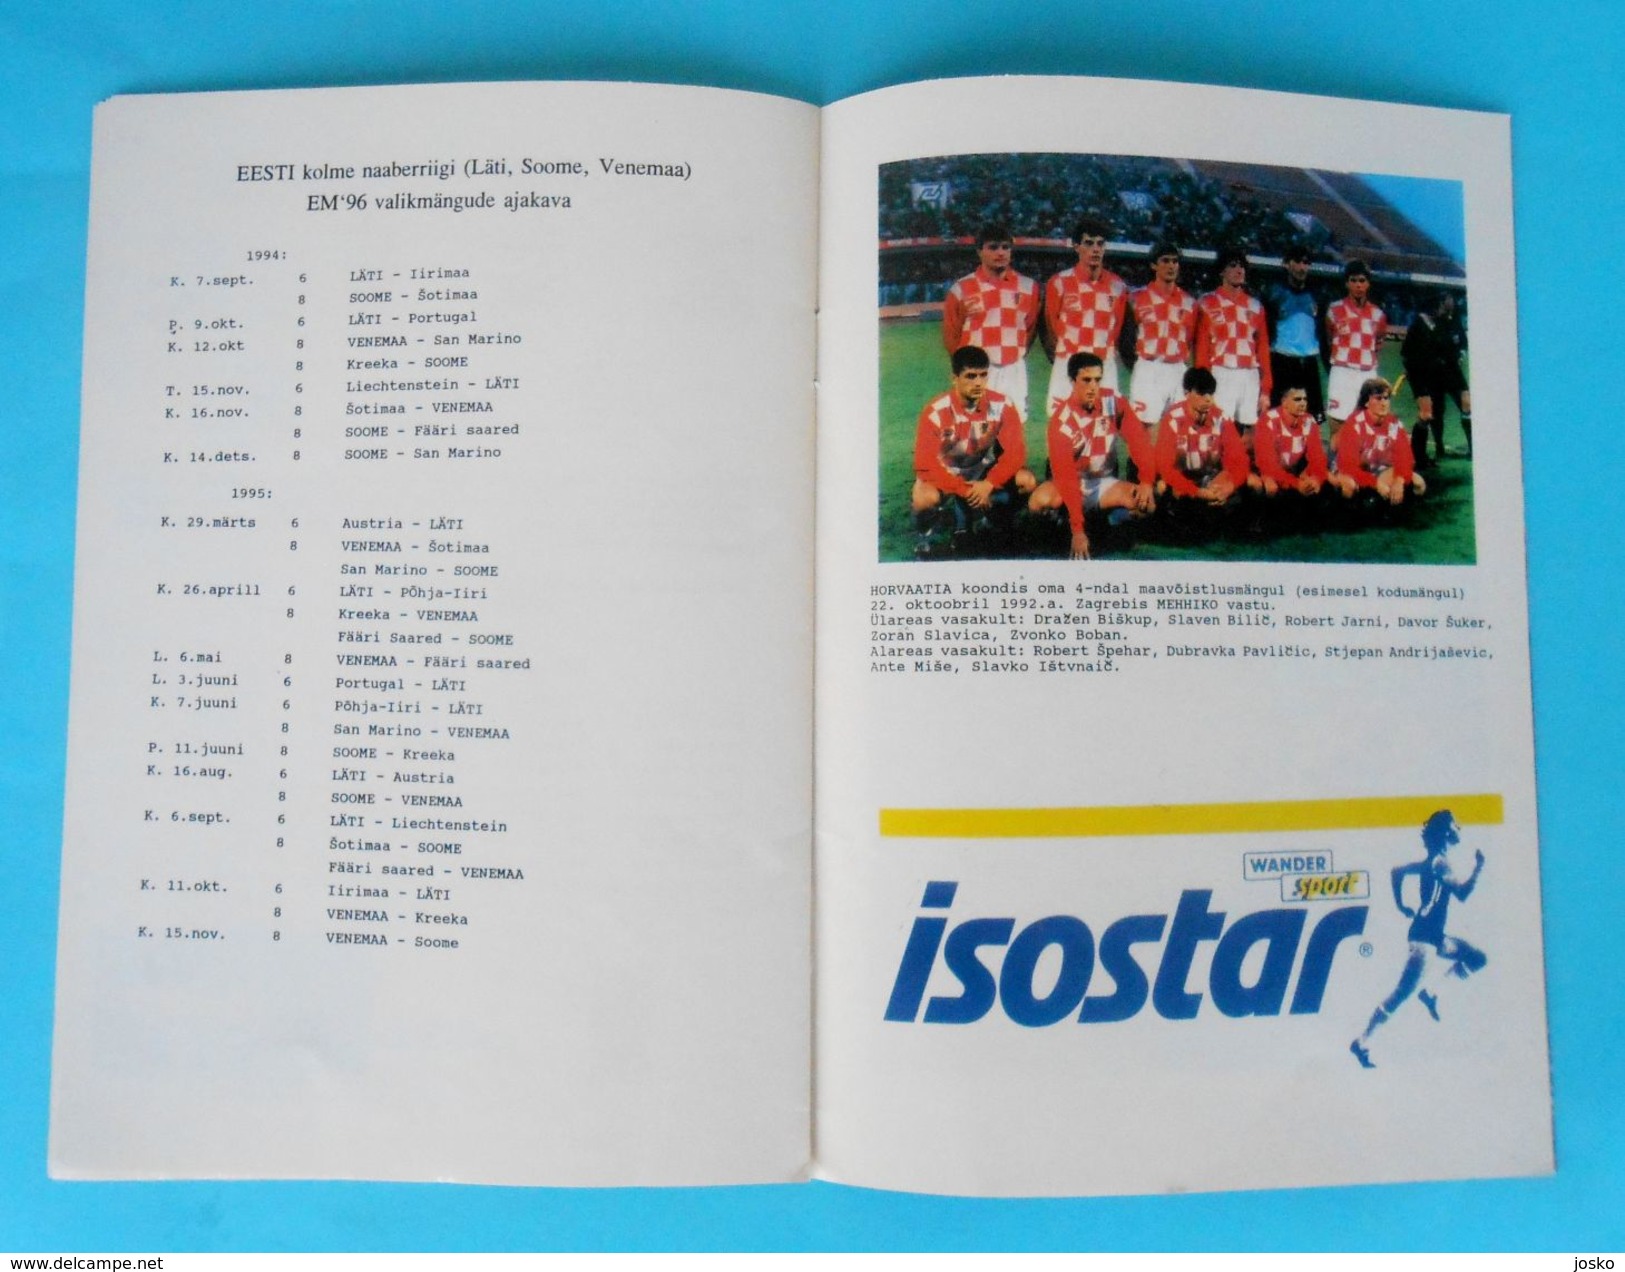 ESTONIA v CROATIA - 1996 UEFA EURO qual. football match programme * soccer fussball programm calcio programma programa